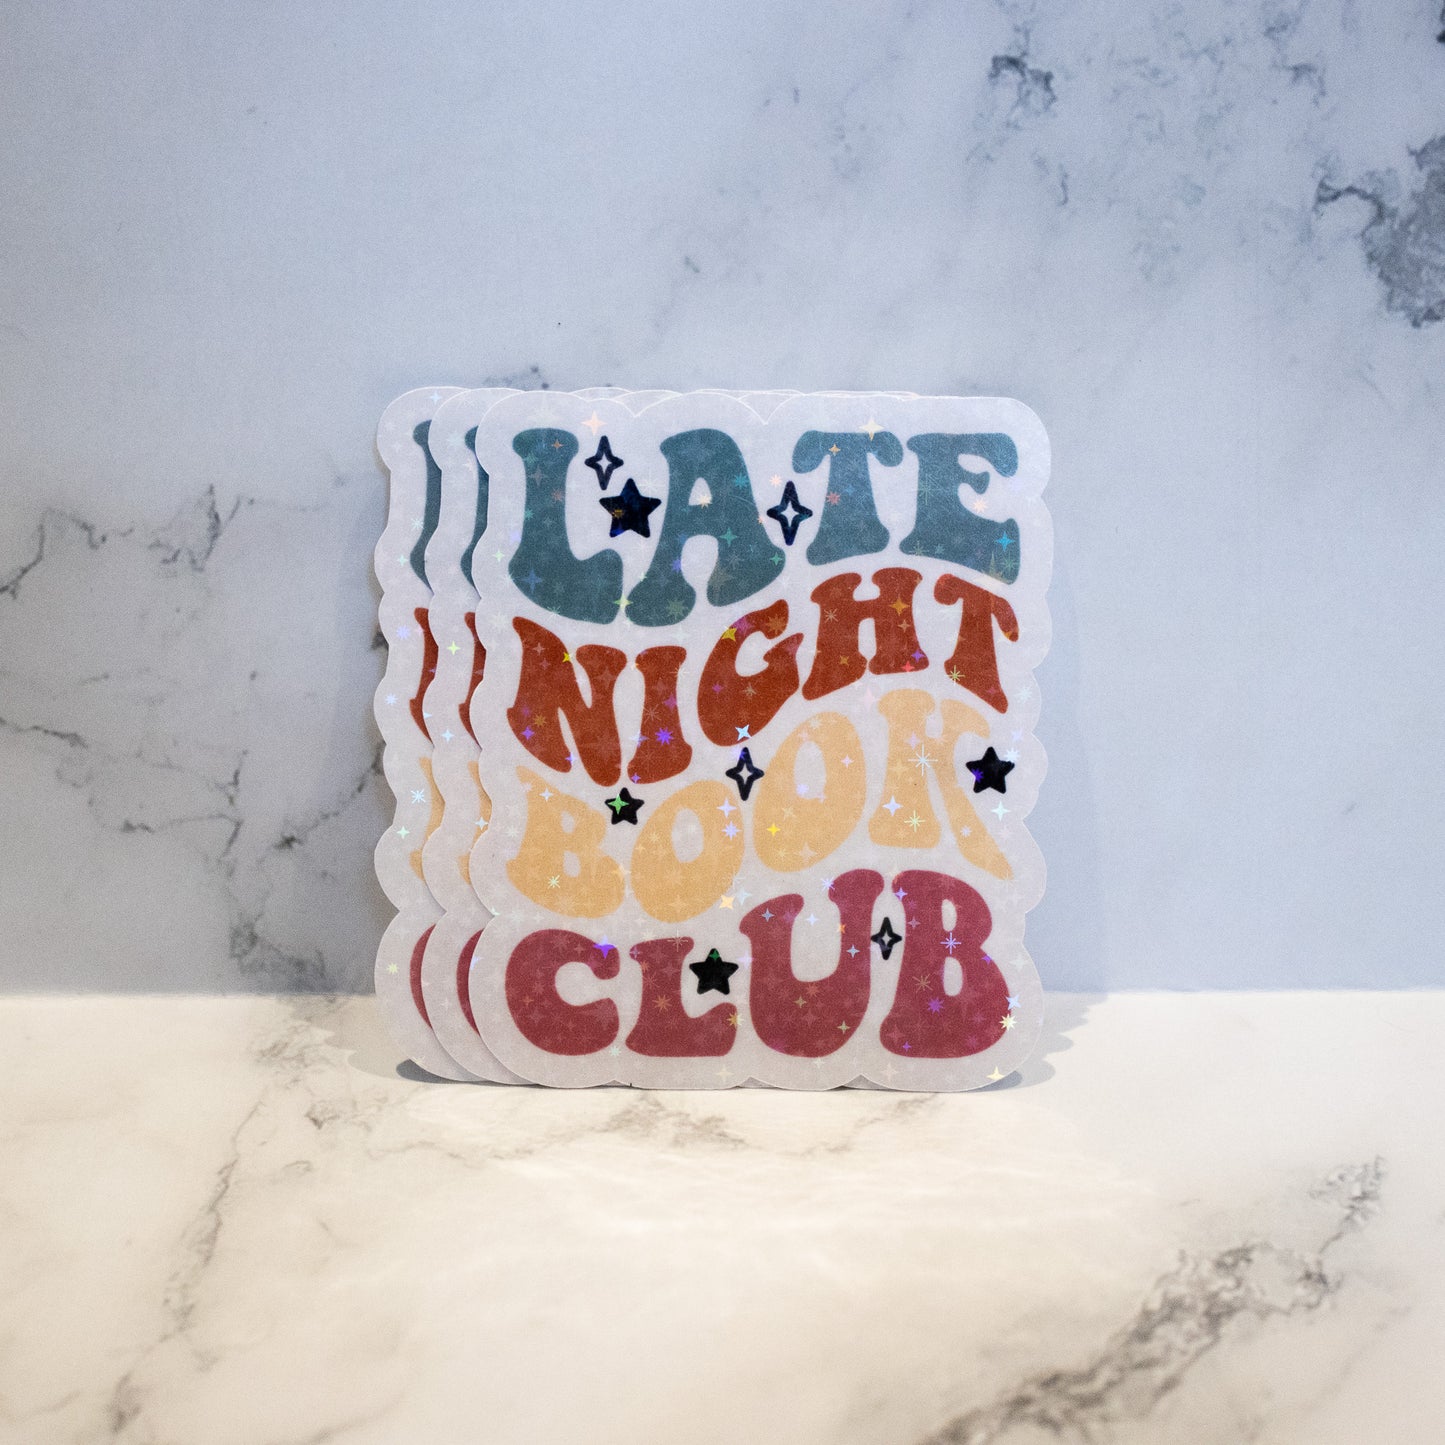 Late Night Book Club Sticker